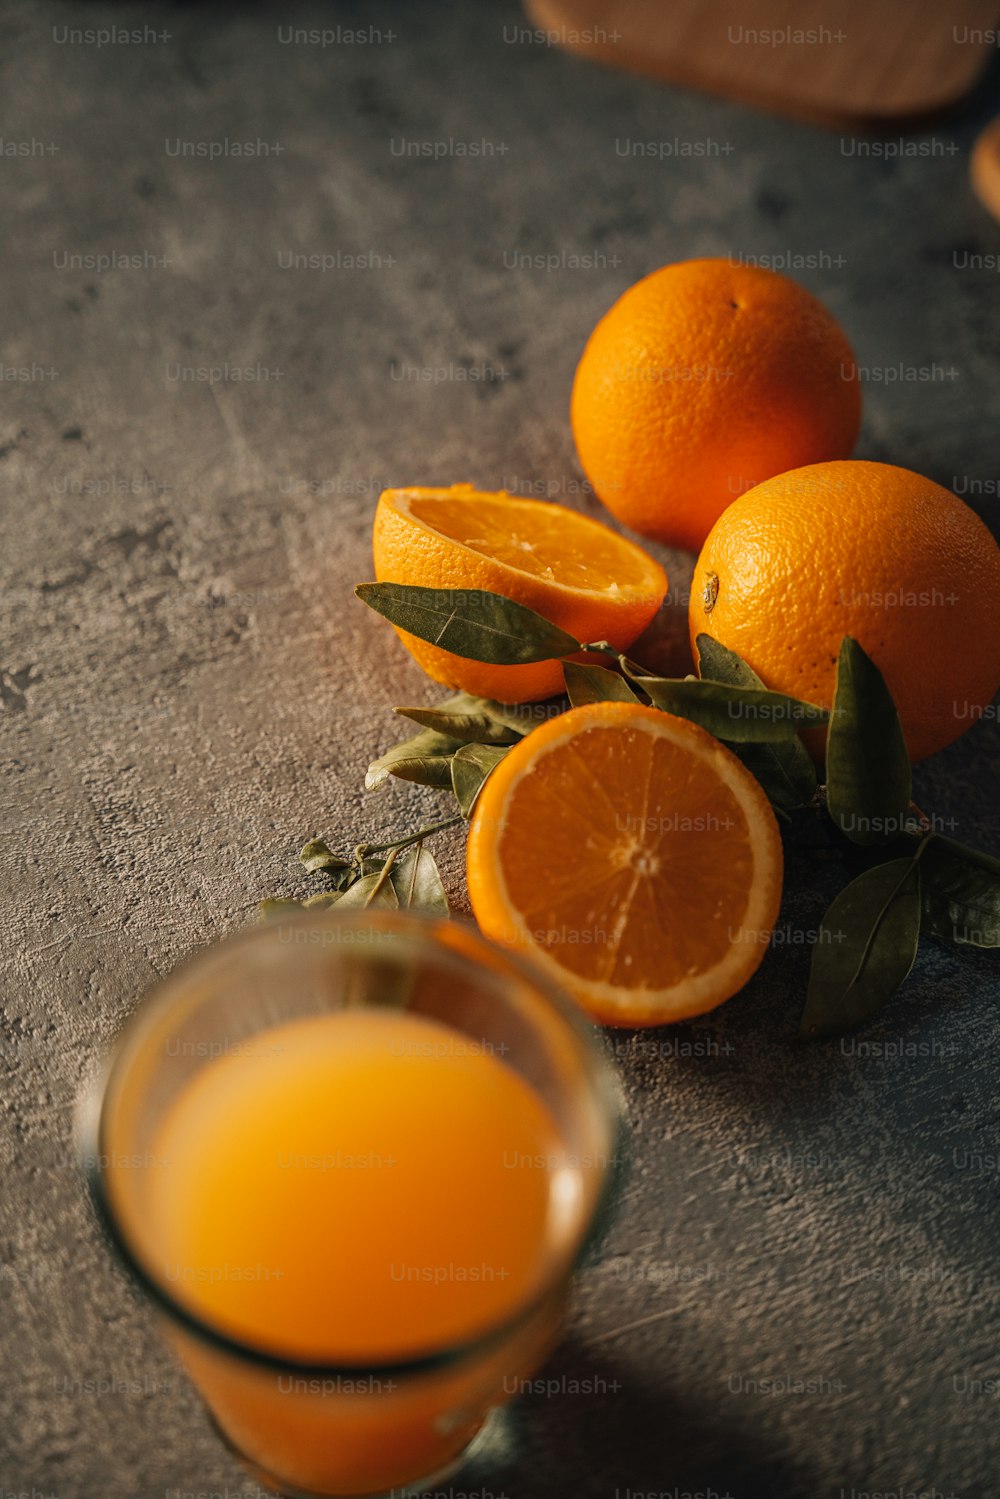 a glass of orange juice next to some oranges